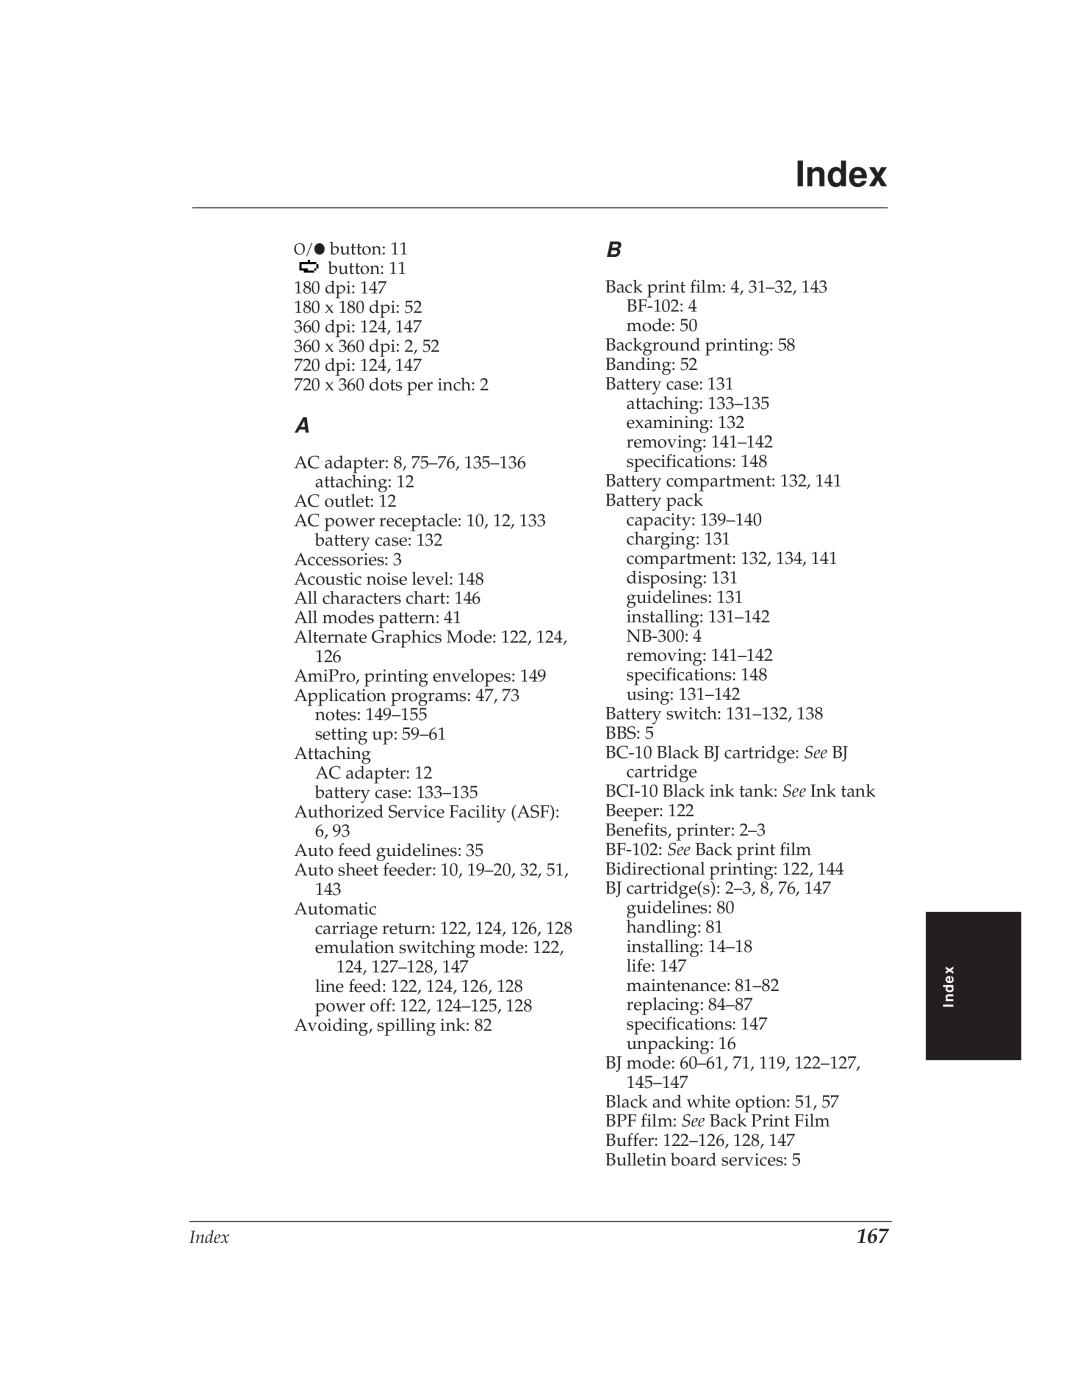 Canon BJ-30 manual Index 